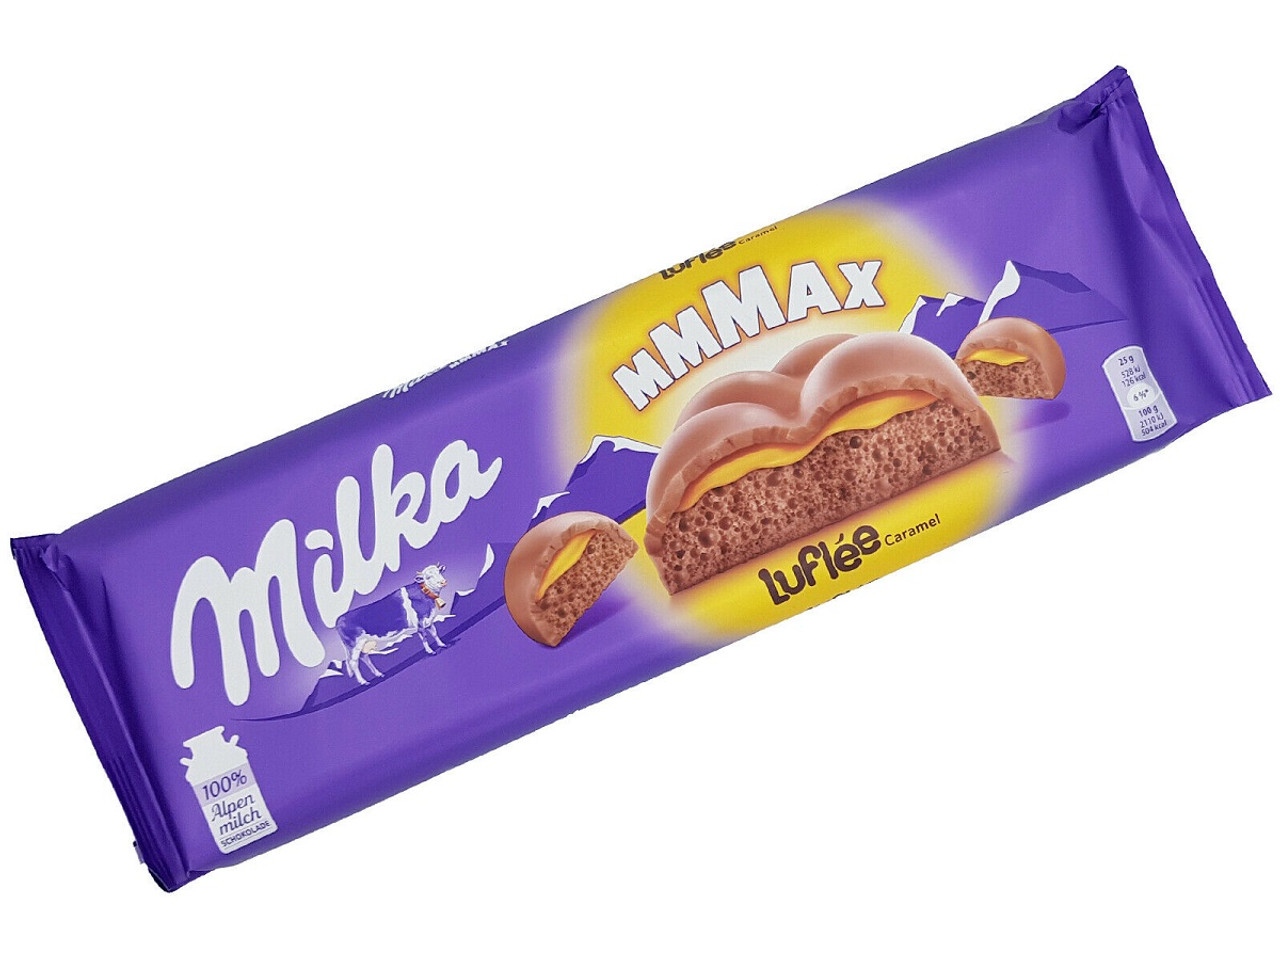 Milka Chocolate with Caramel and Milk Cream, 100g